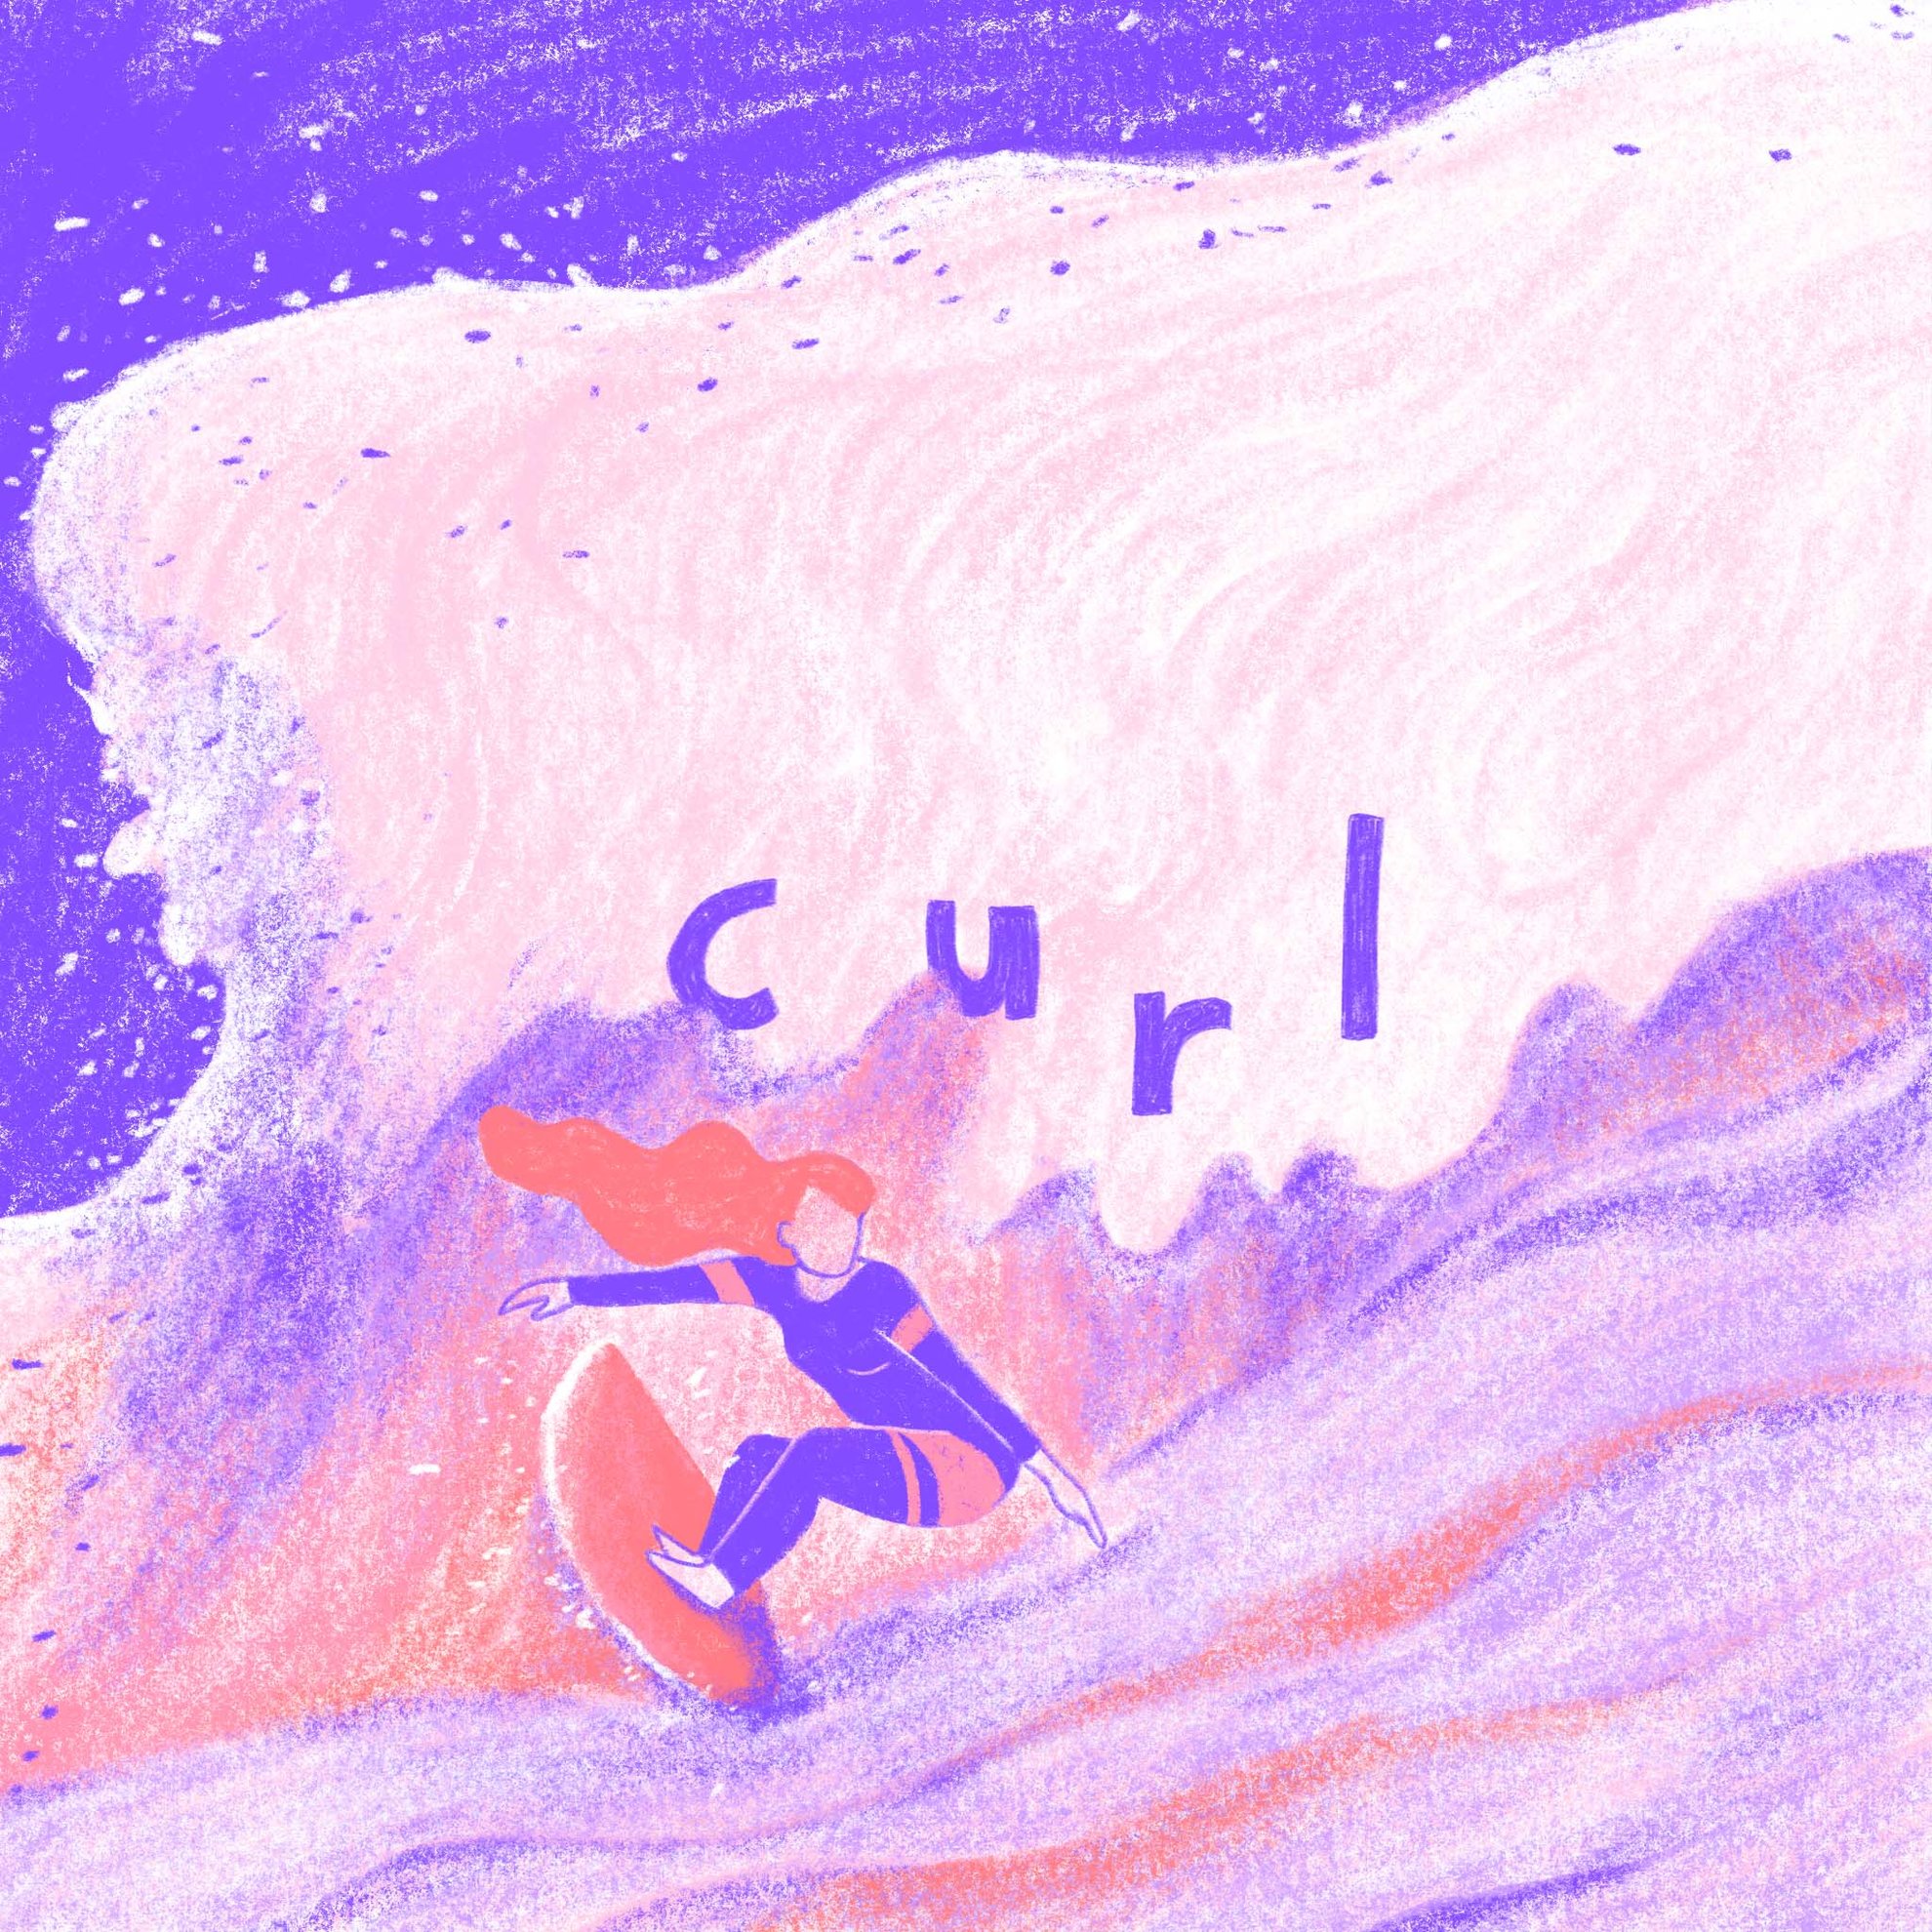 CURL - SURF.jpg